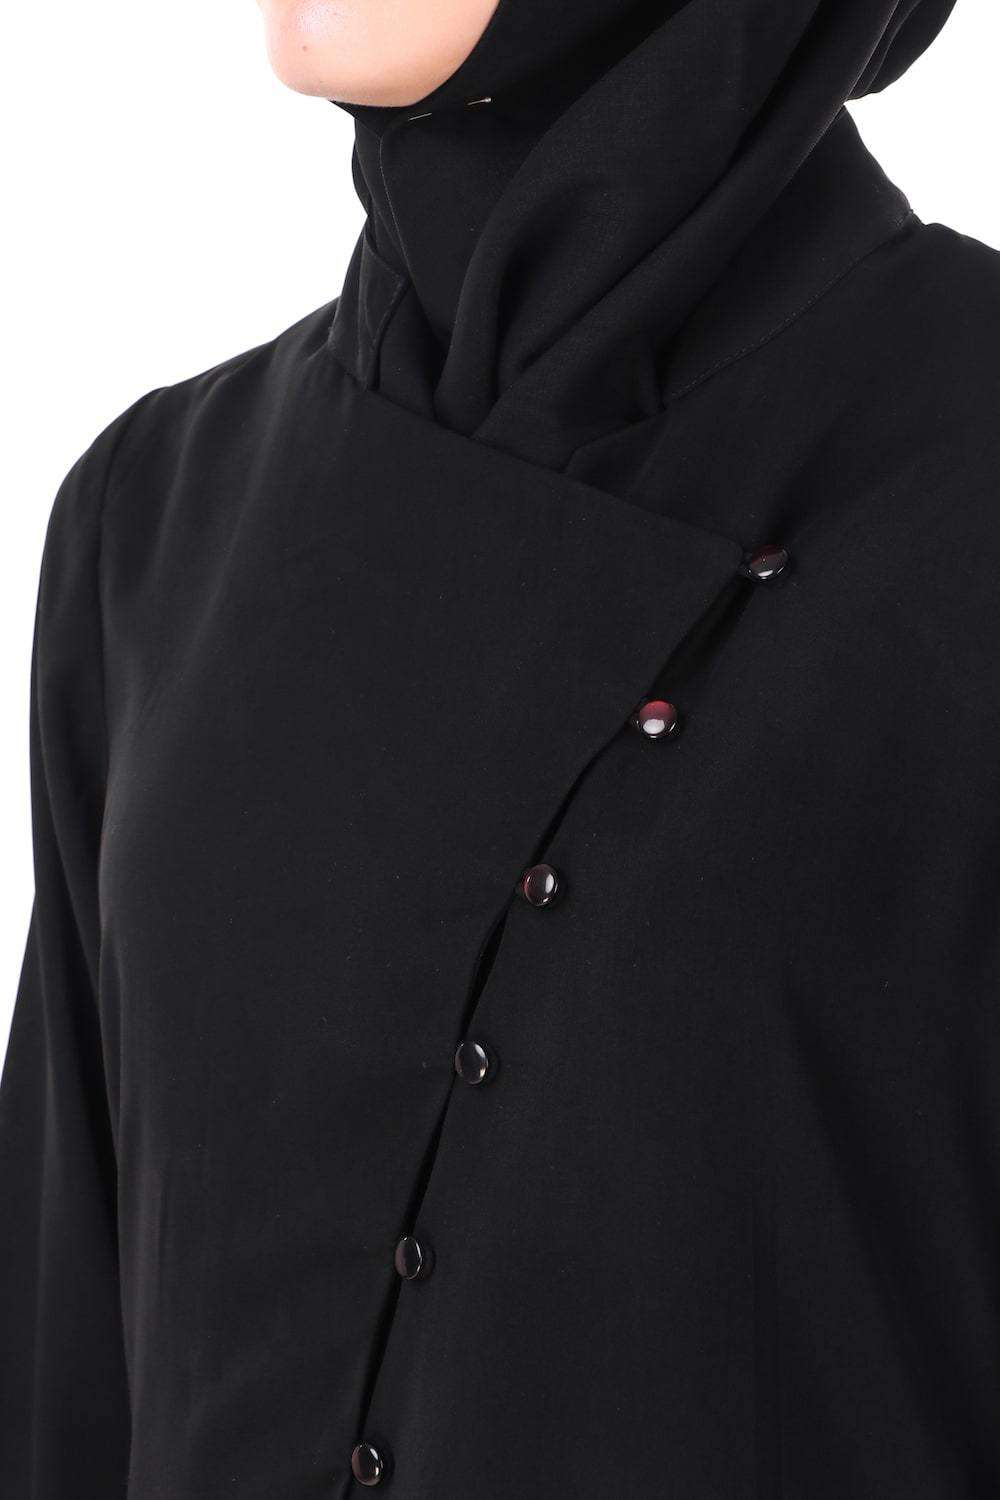 Dual Layer Cross Over Jacket Abaya Front Design